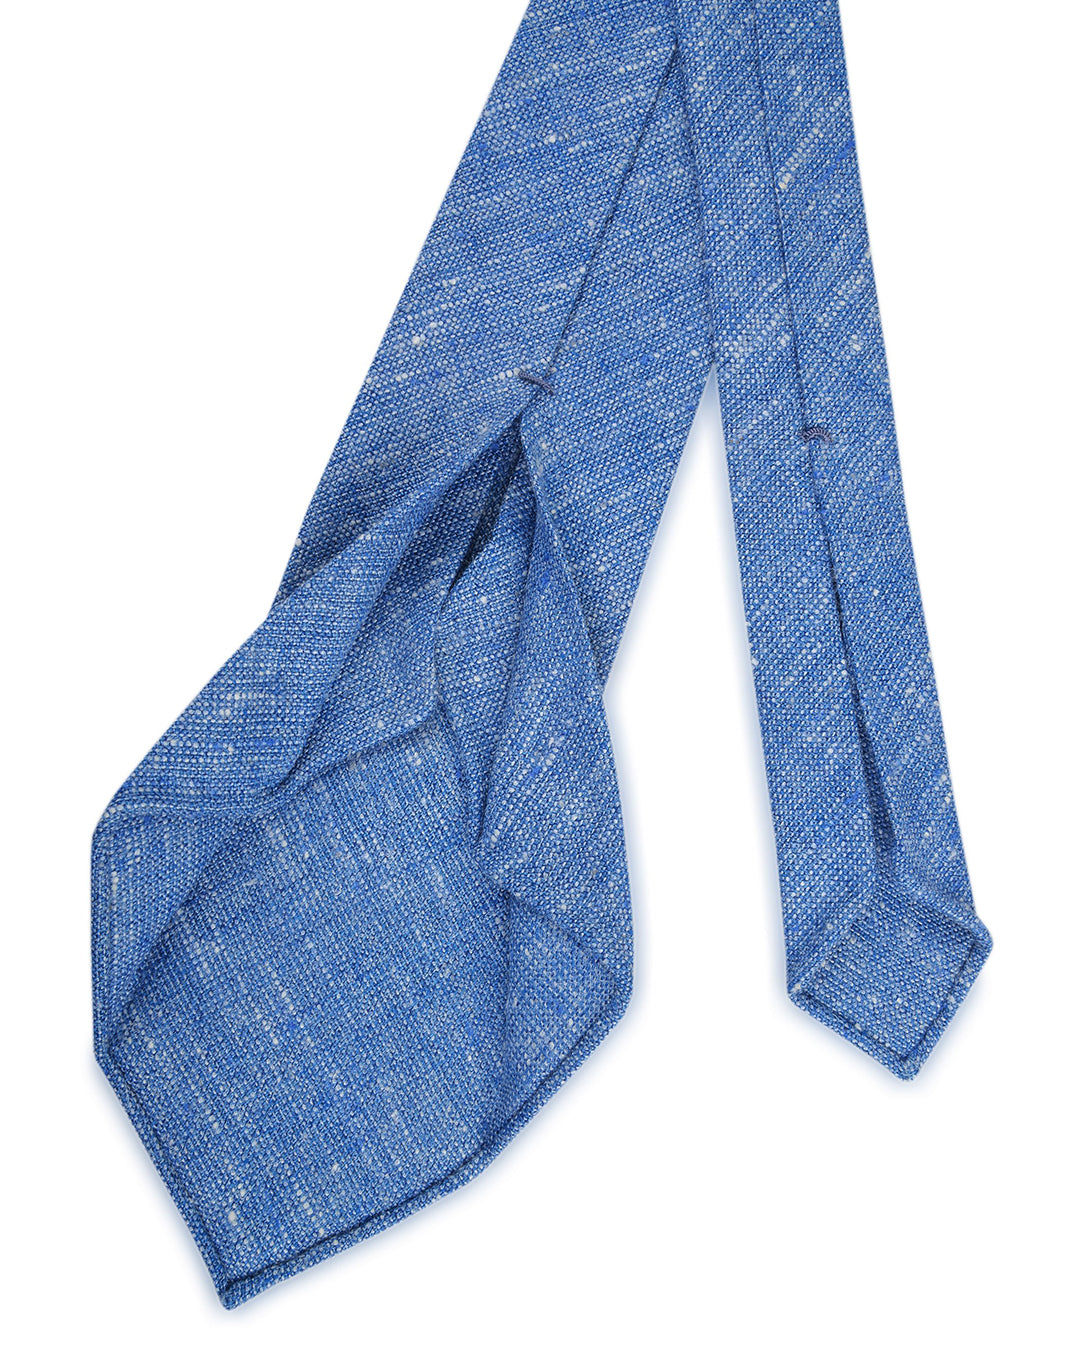 EThomas Blue Textured Tie